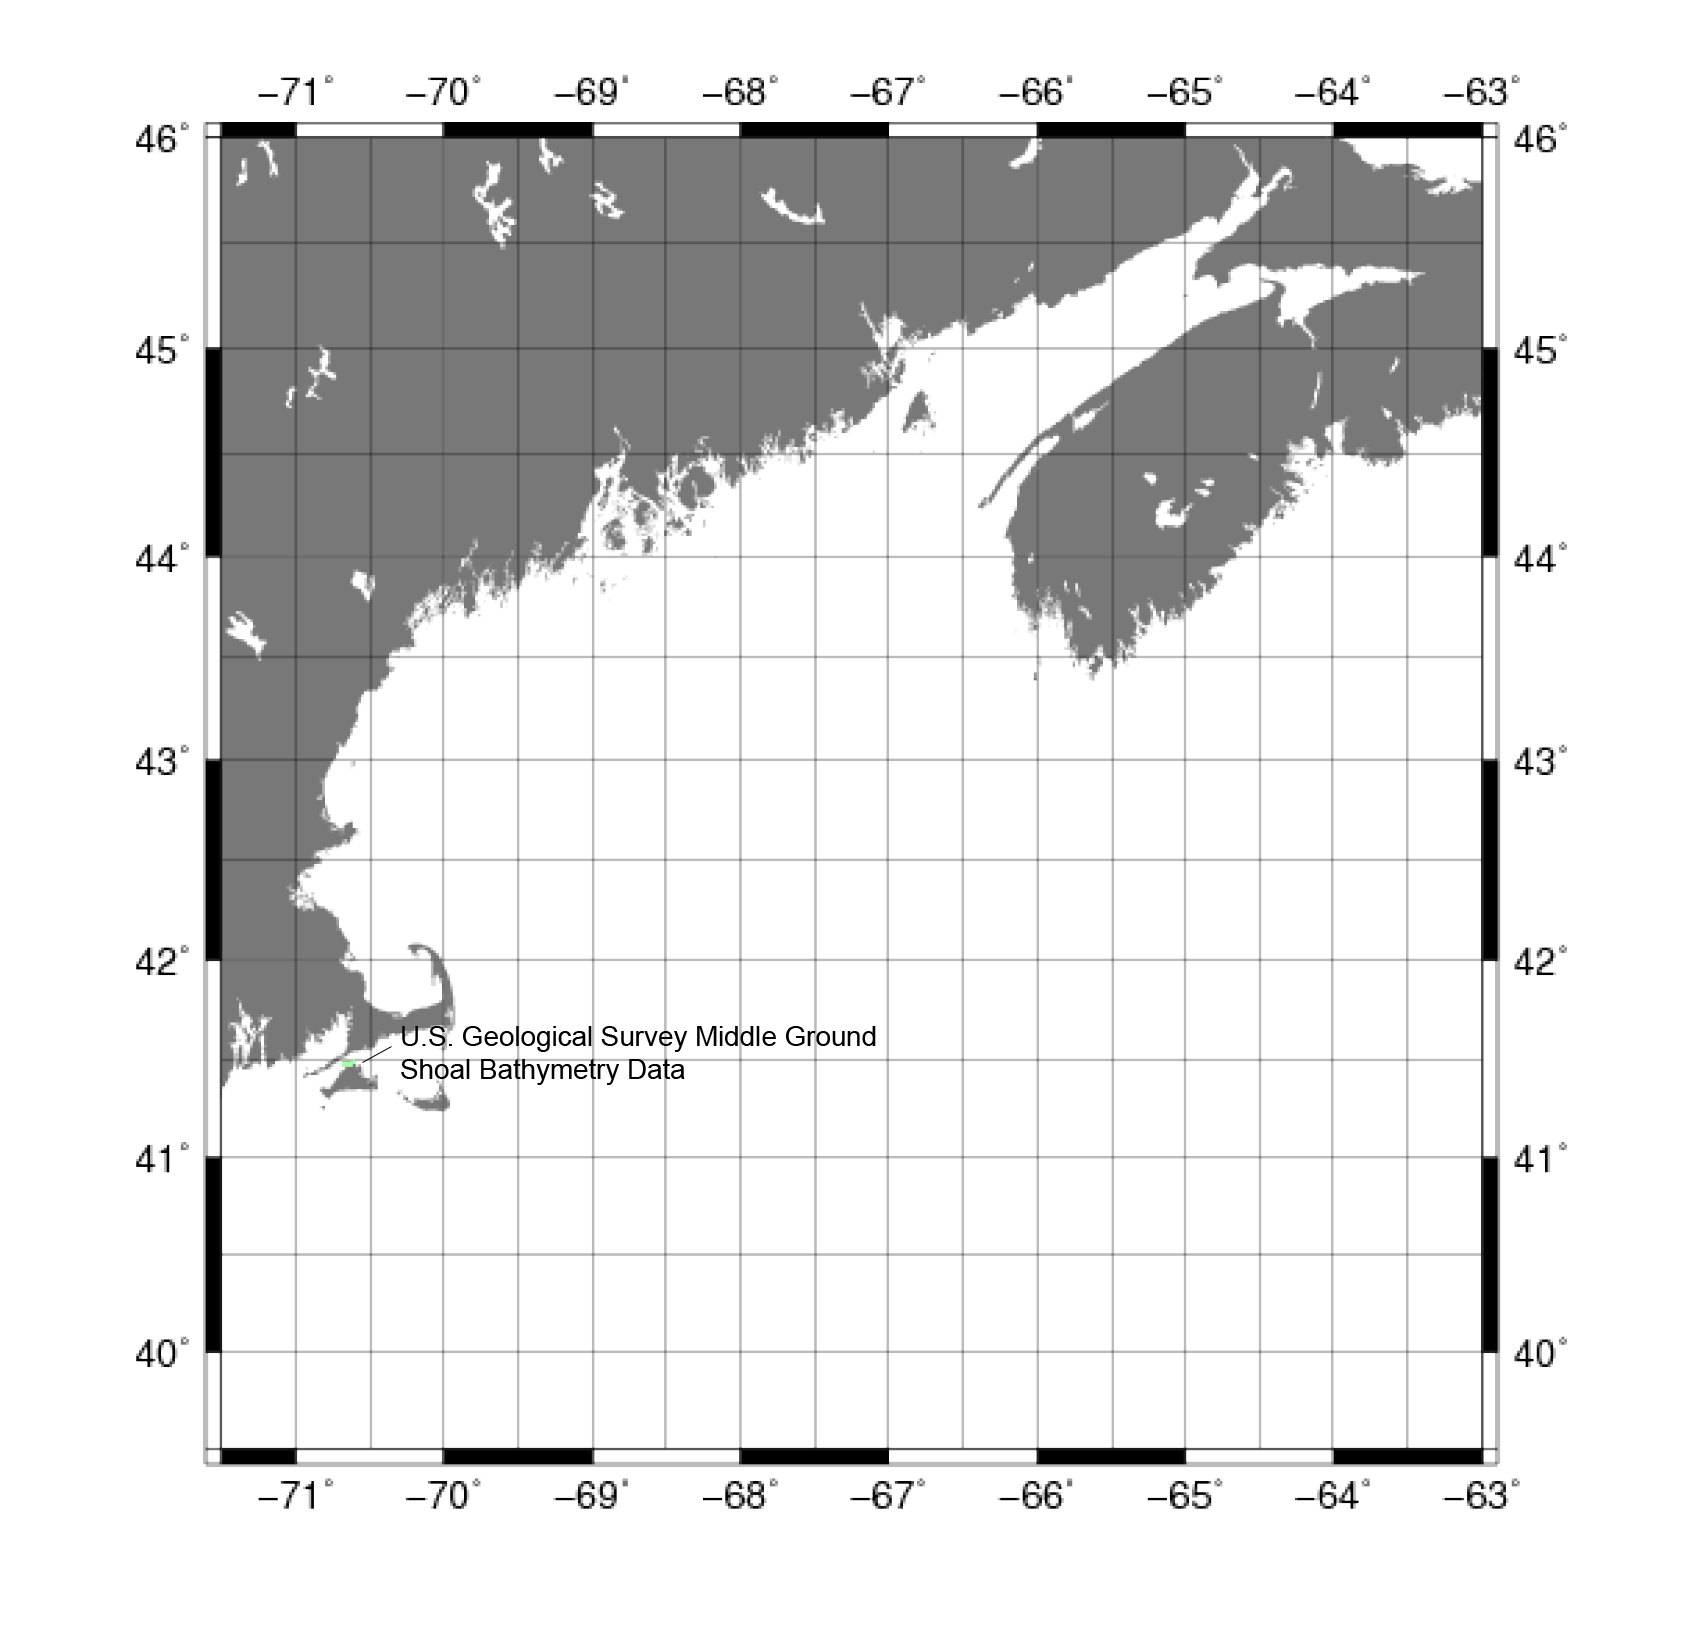 National Ocean Service Office of Coast Survey, U.S. Bathymetric and Fishing Maps